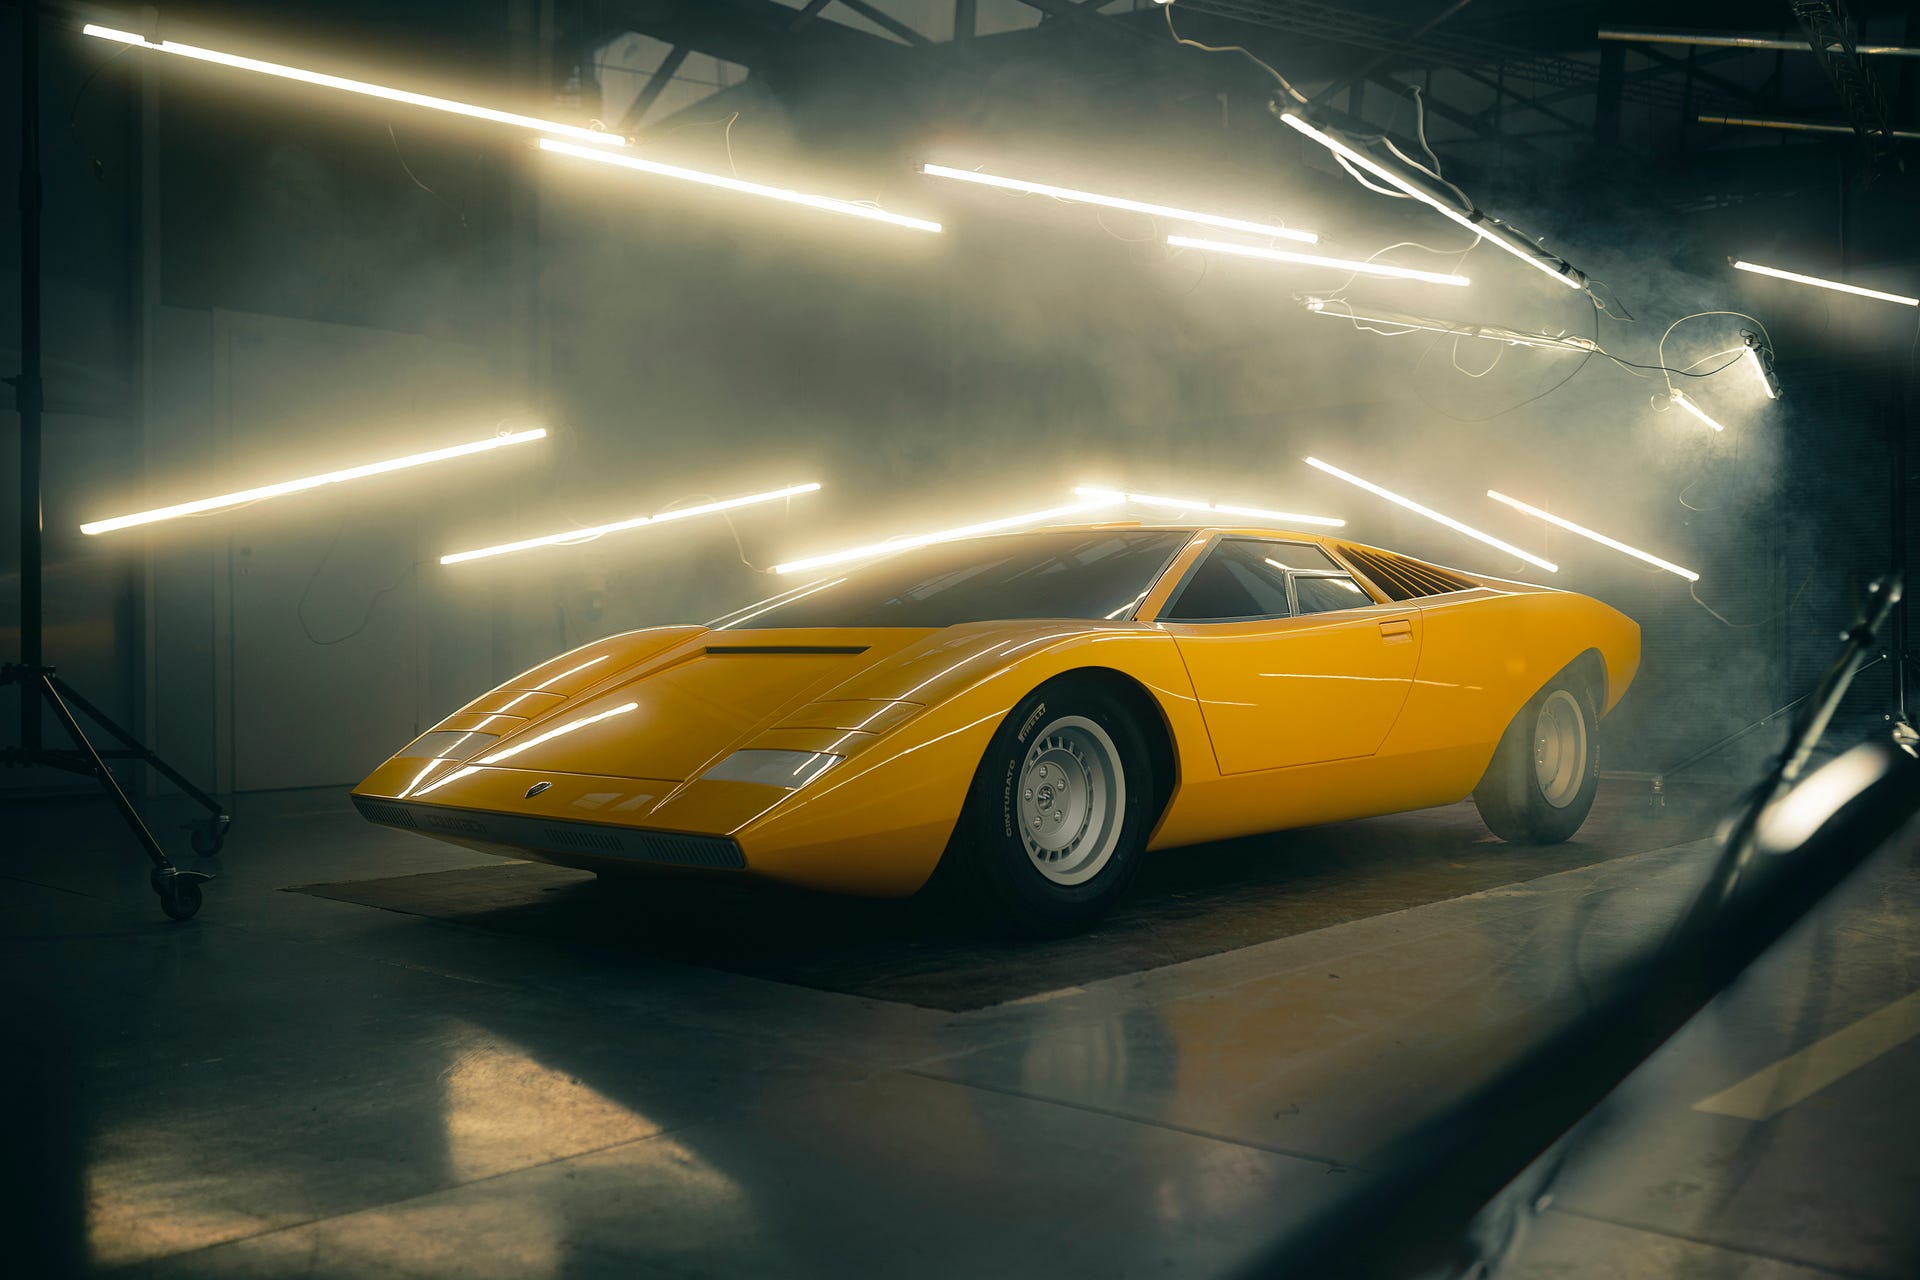 Lamborghini recreated the original Countach LP500 concept for a